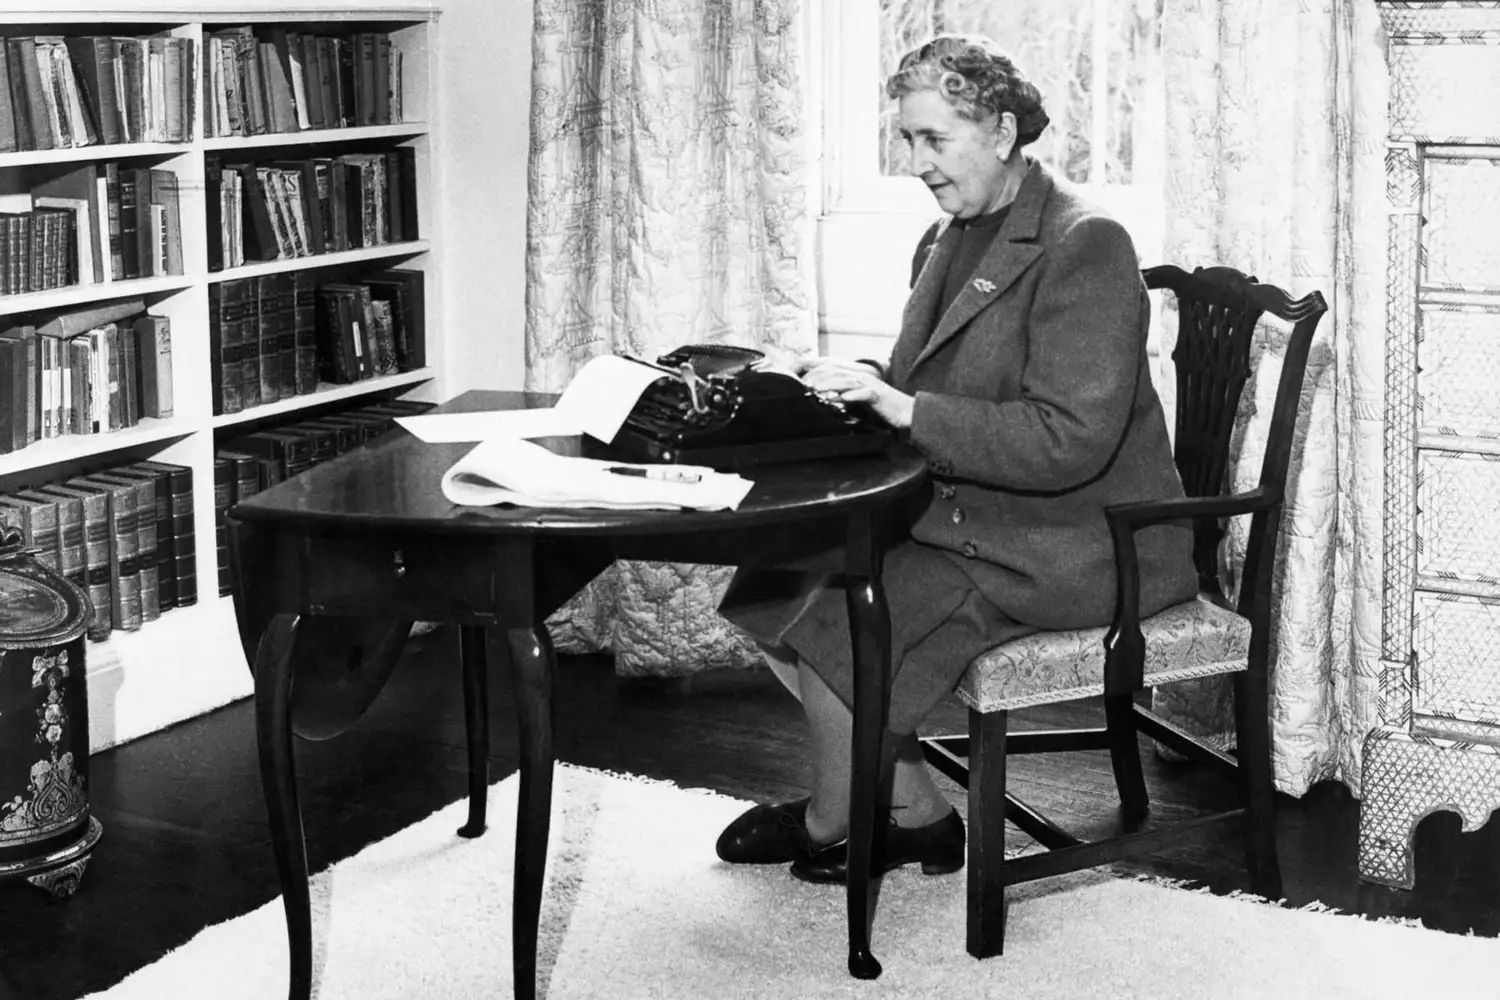 Agatha Christie embarked